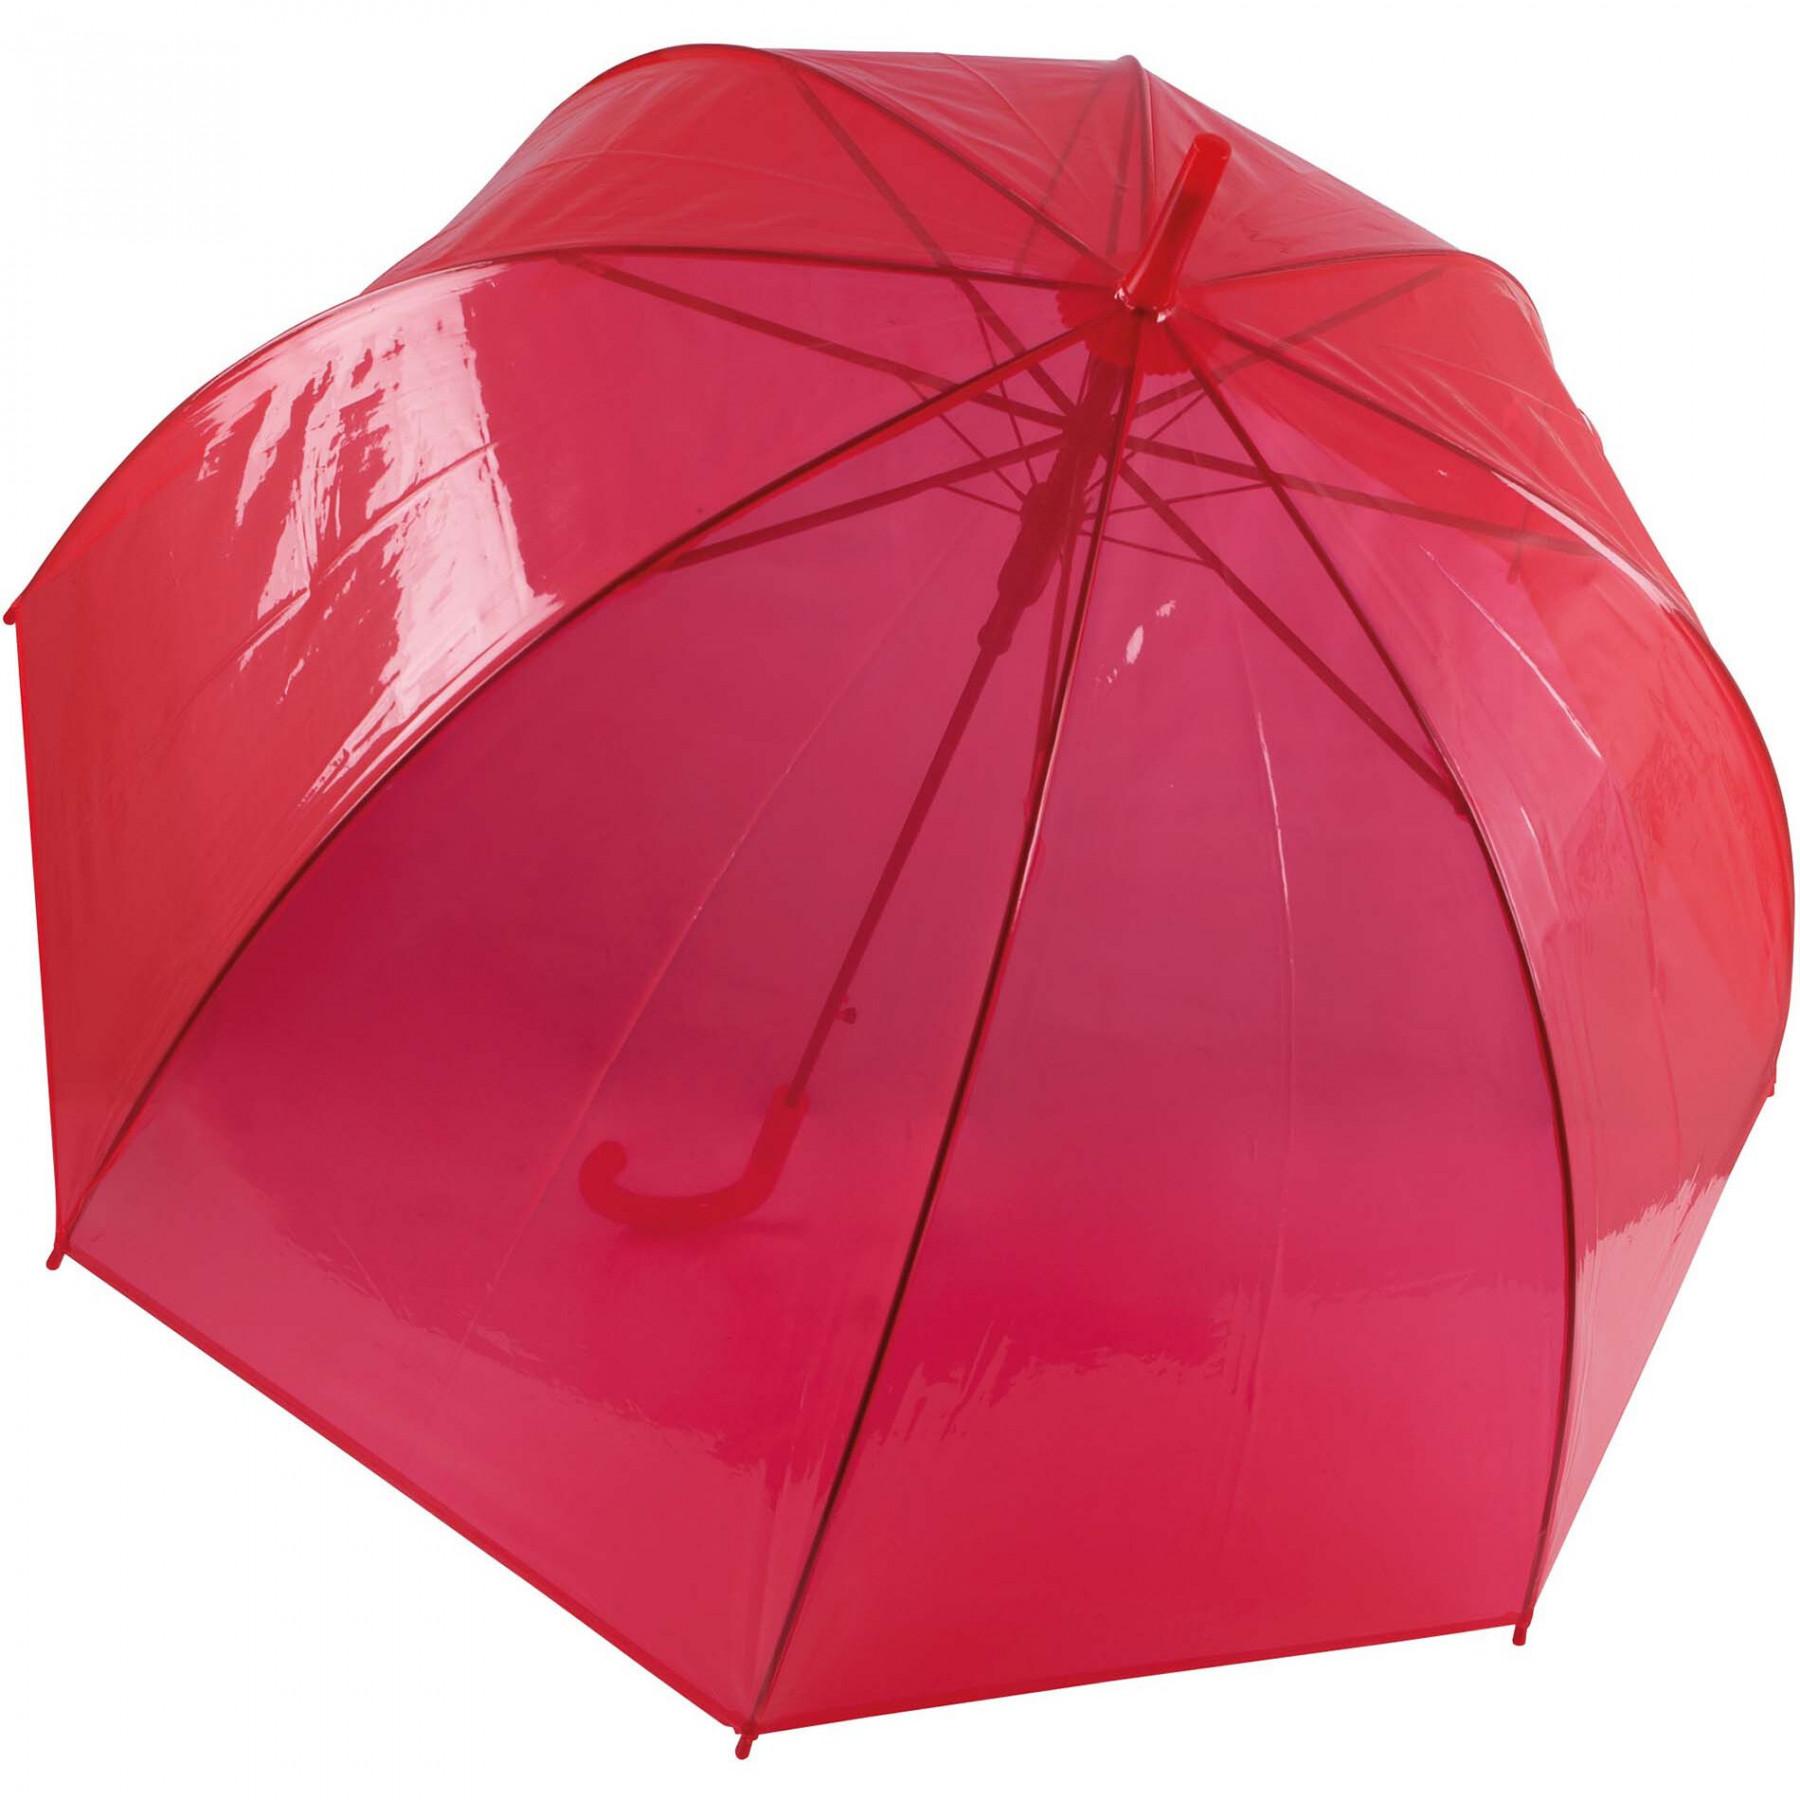 Parapluie Klmood Transparent